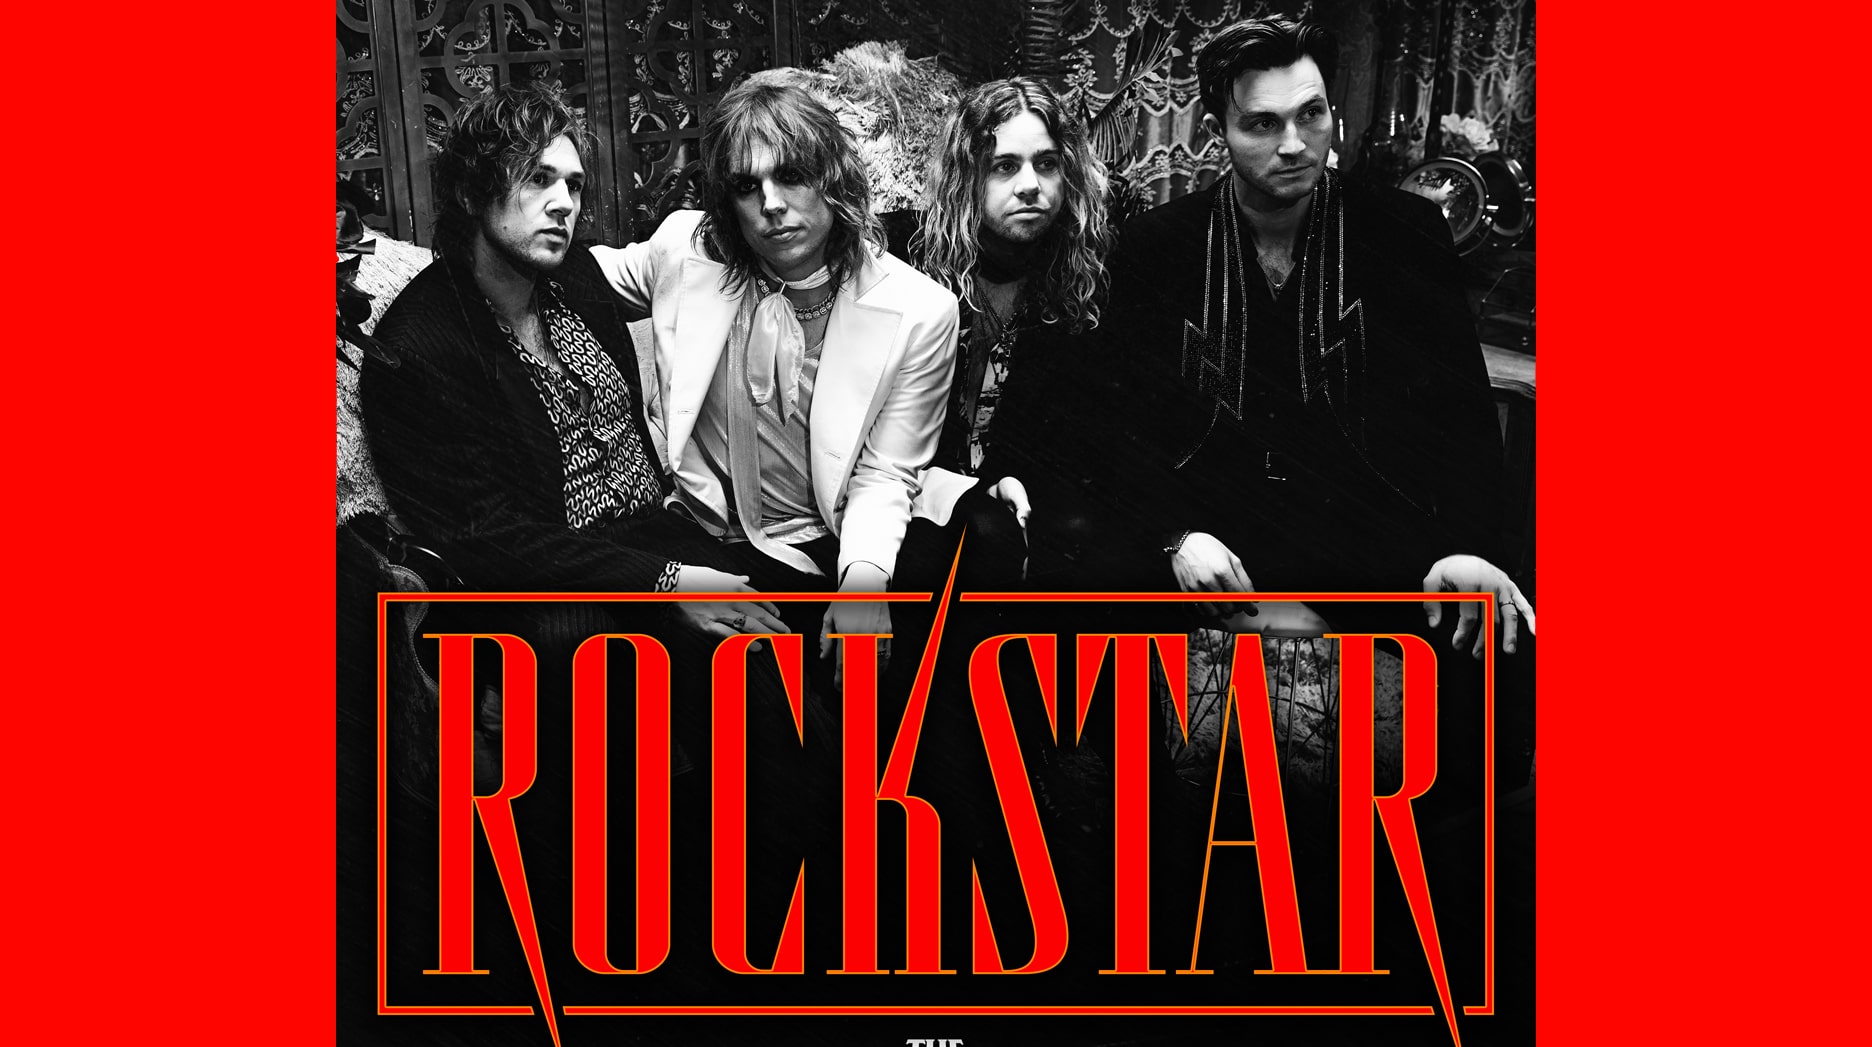 The Struts release new single Rockstar